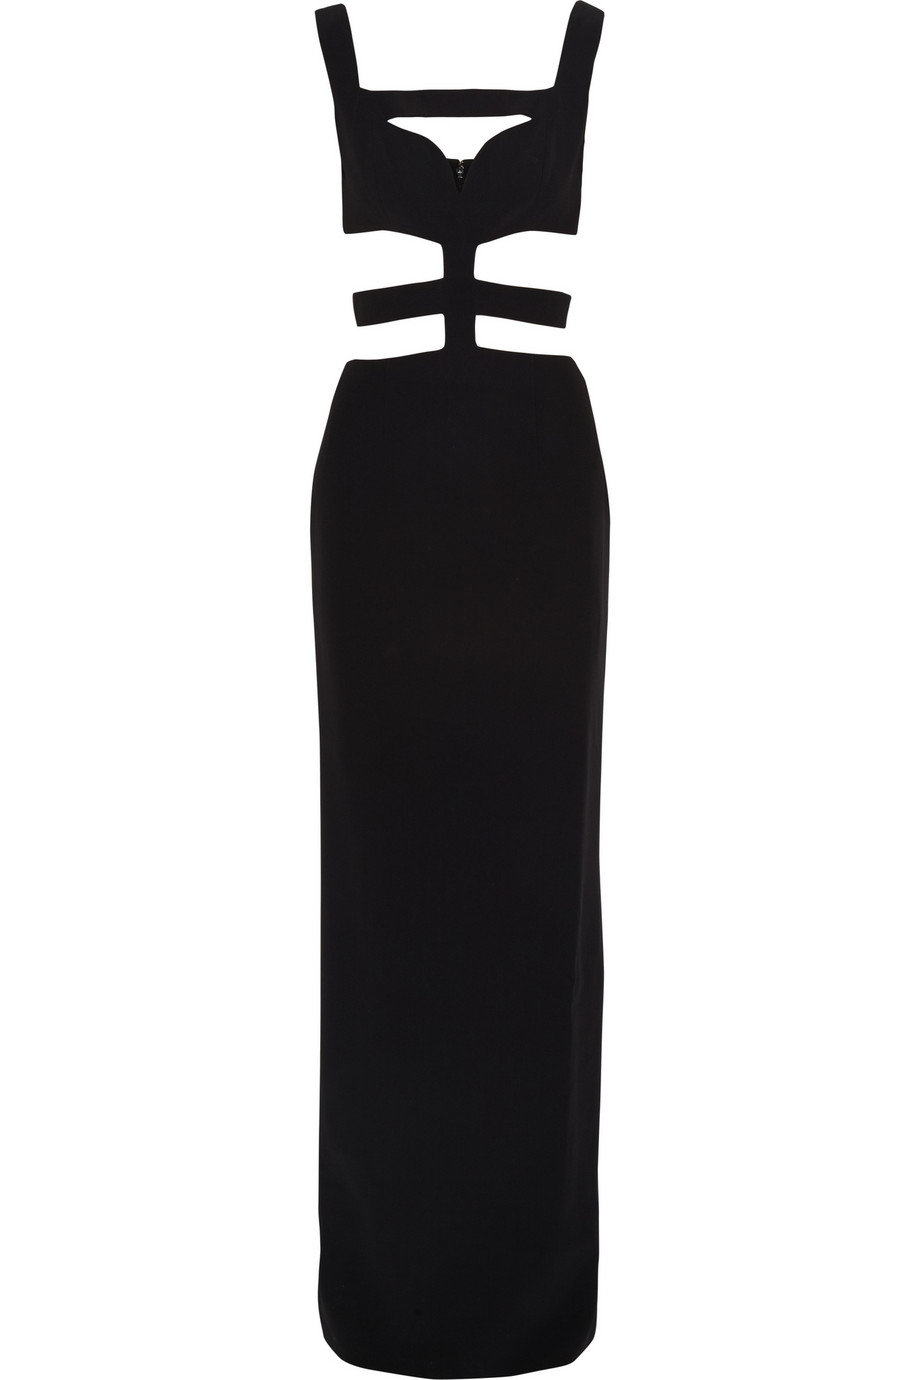 Lyst - Alexander Mcqueen Cutout Crepe Gown in Black